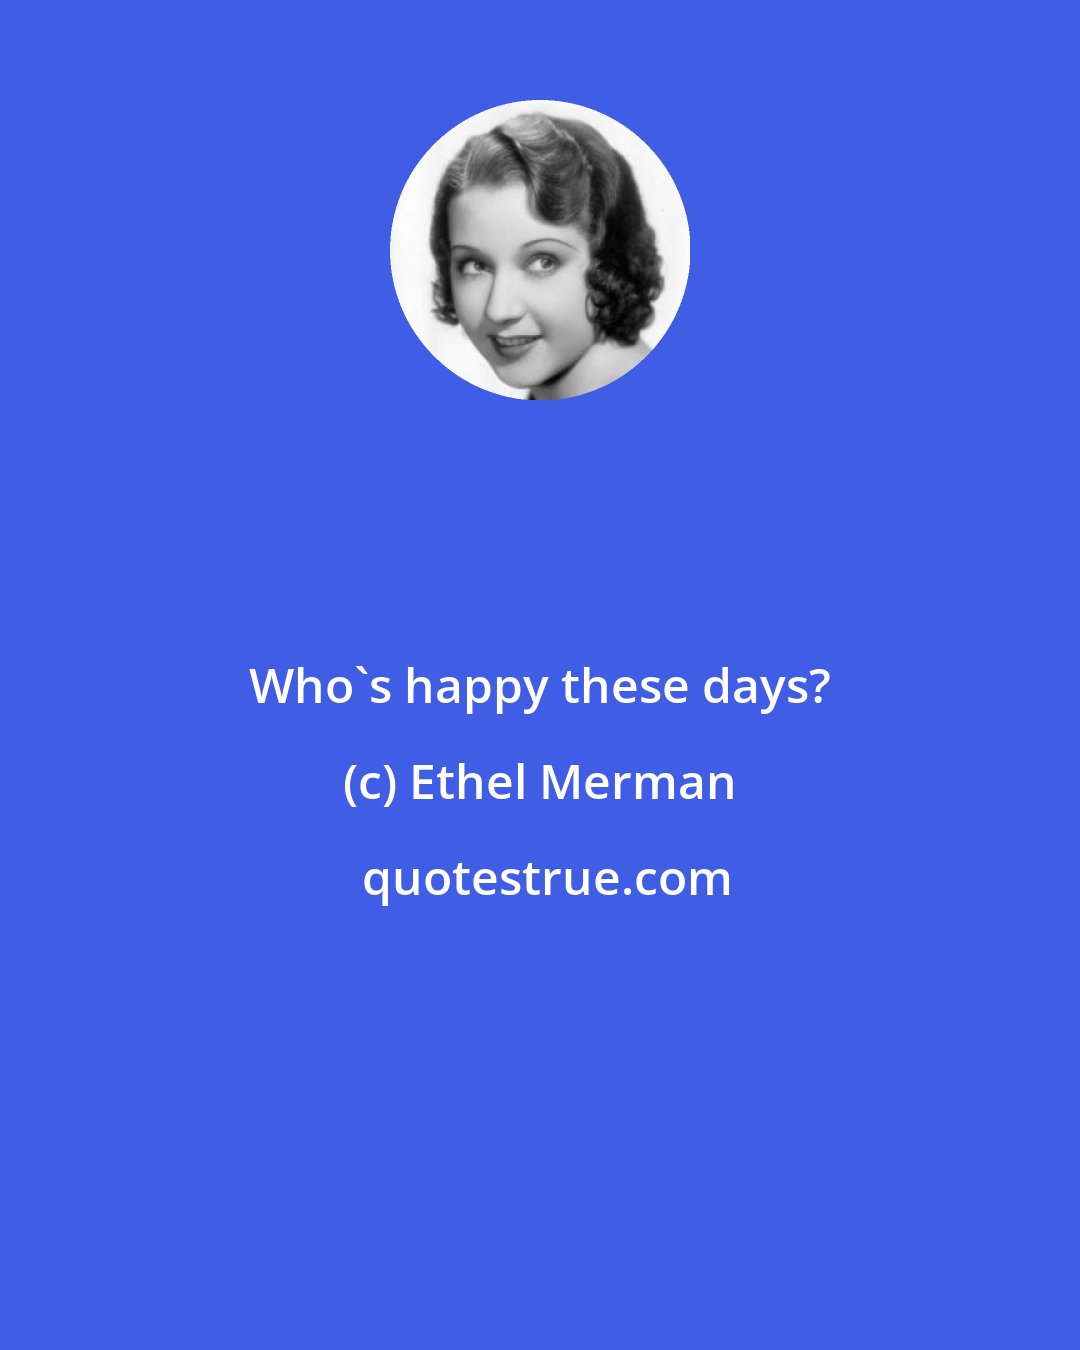 Ethel Merman: Who's happy these days?